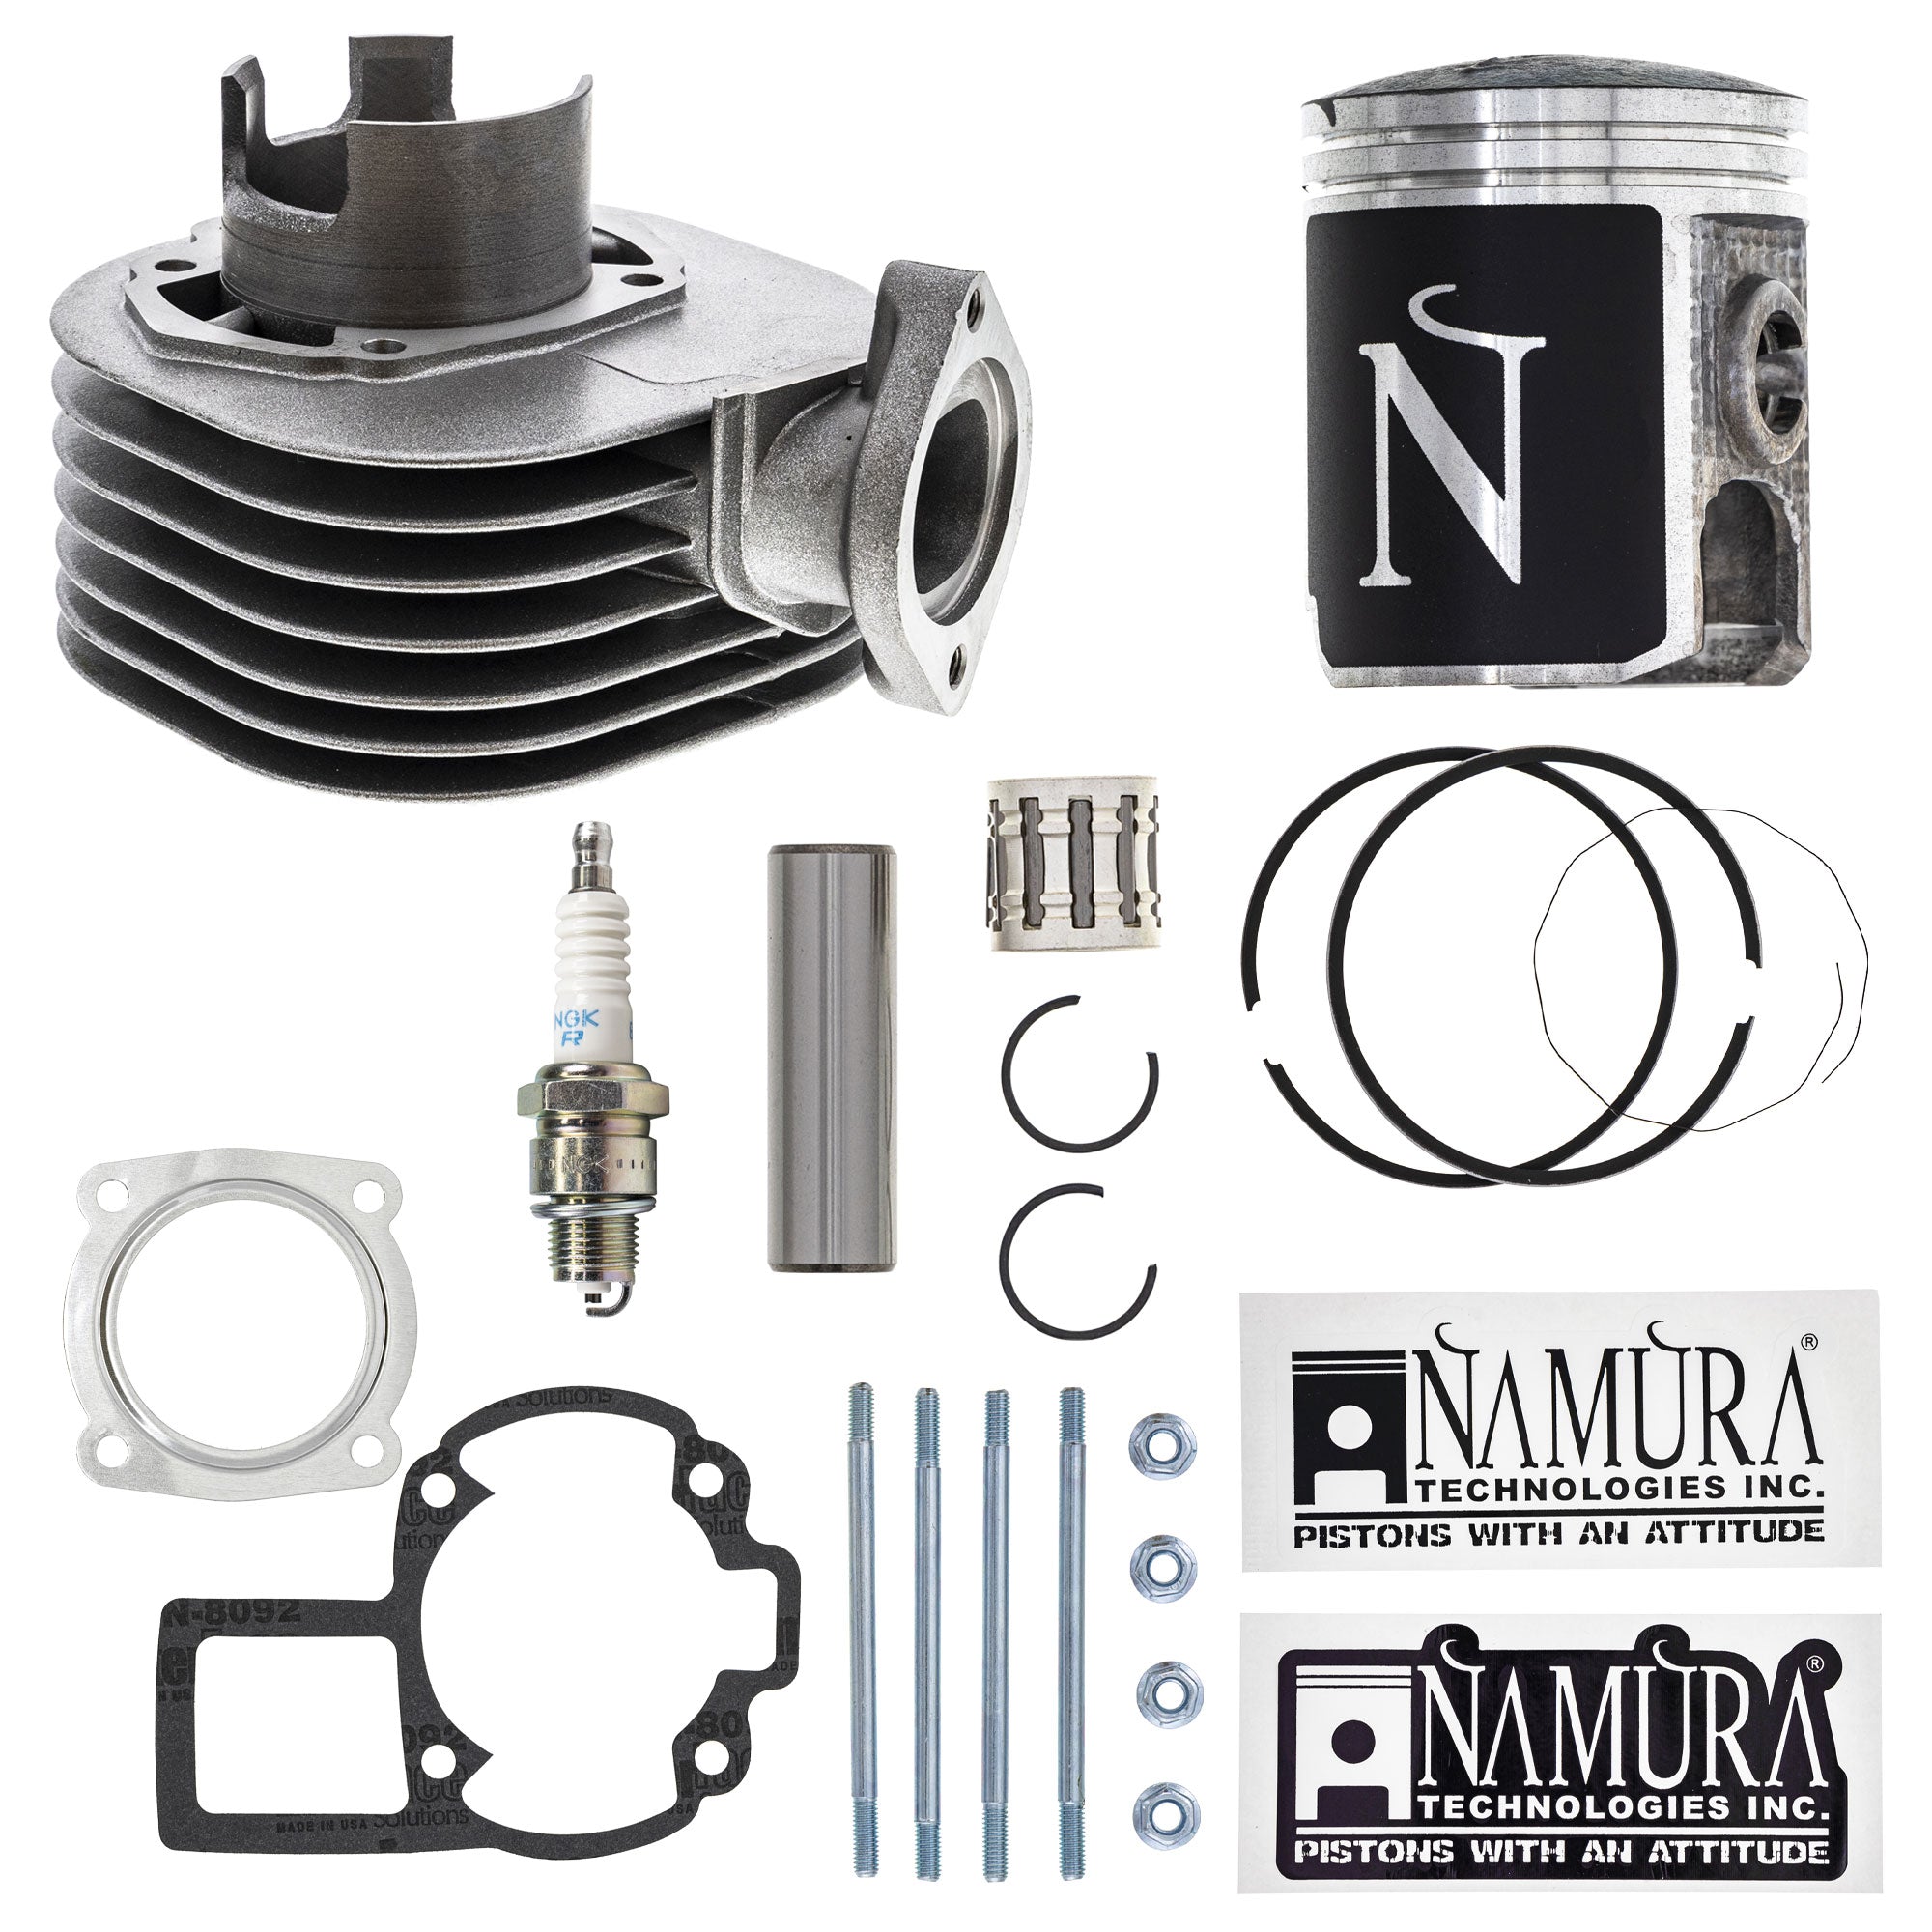 Cylinder Namura Piston Gasket Spark Plug Stud Kit for Quadsport KFX80 NICHE MK1012547